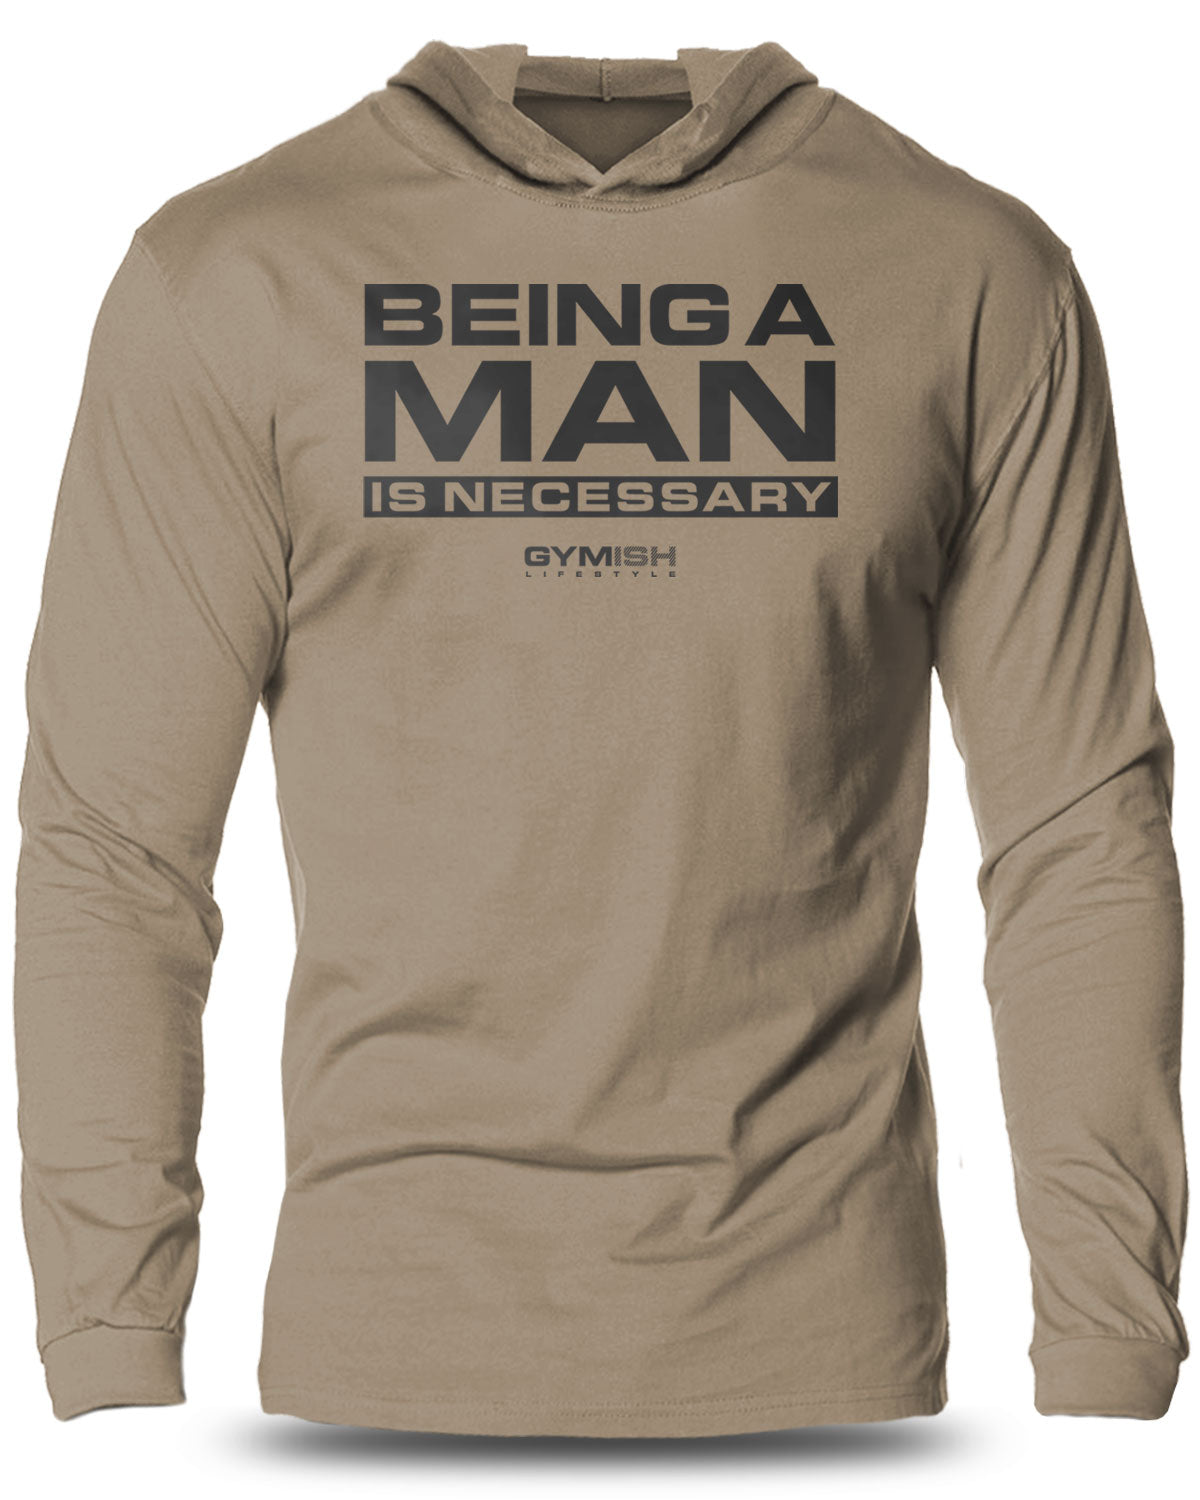 062- Being A Man is Necessary Lightweight Long Sleeve Hooded T-shirt for Men